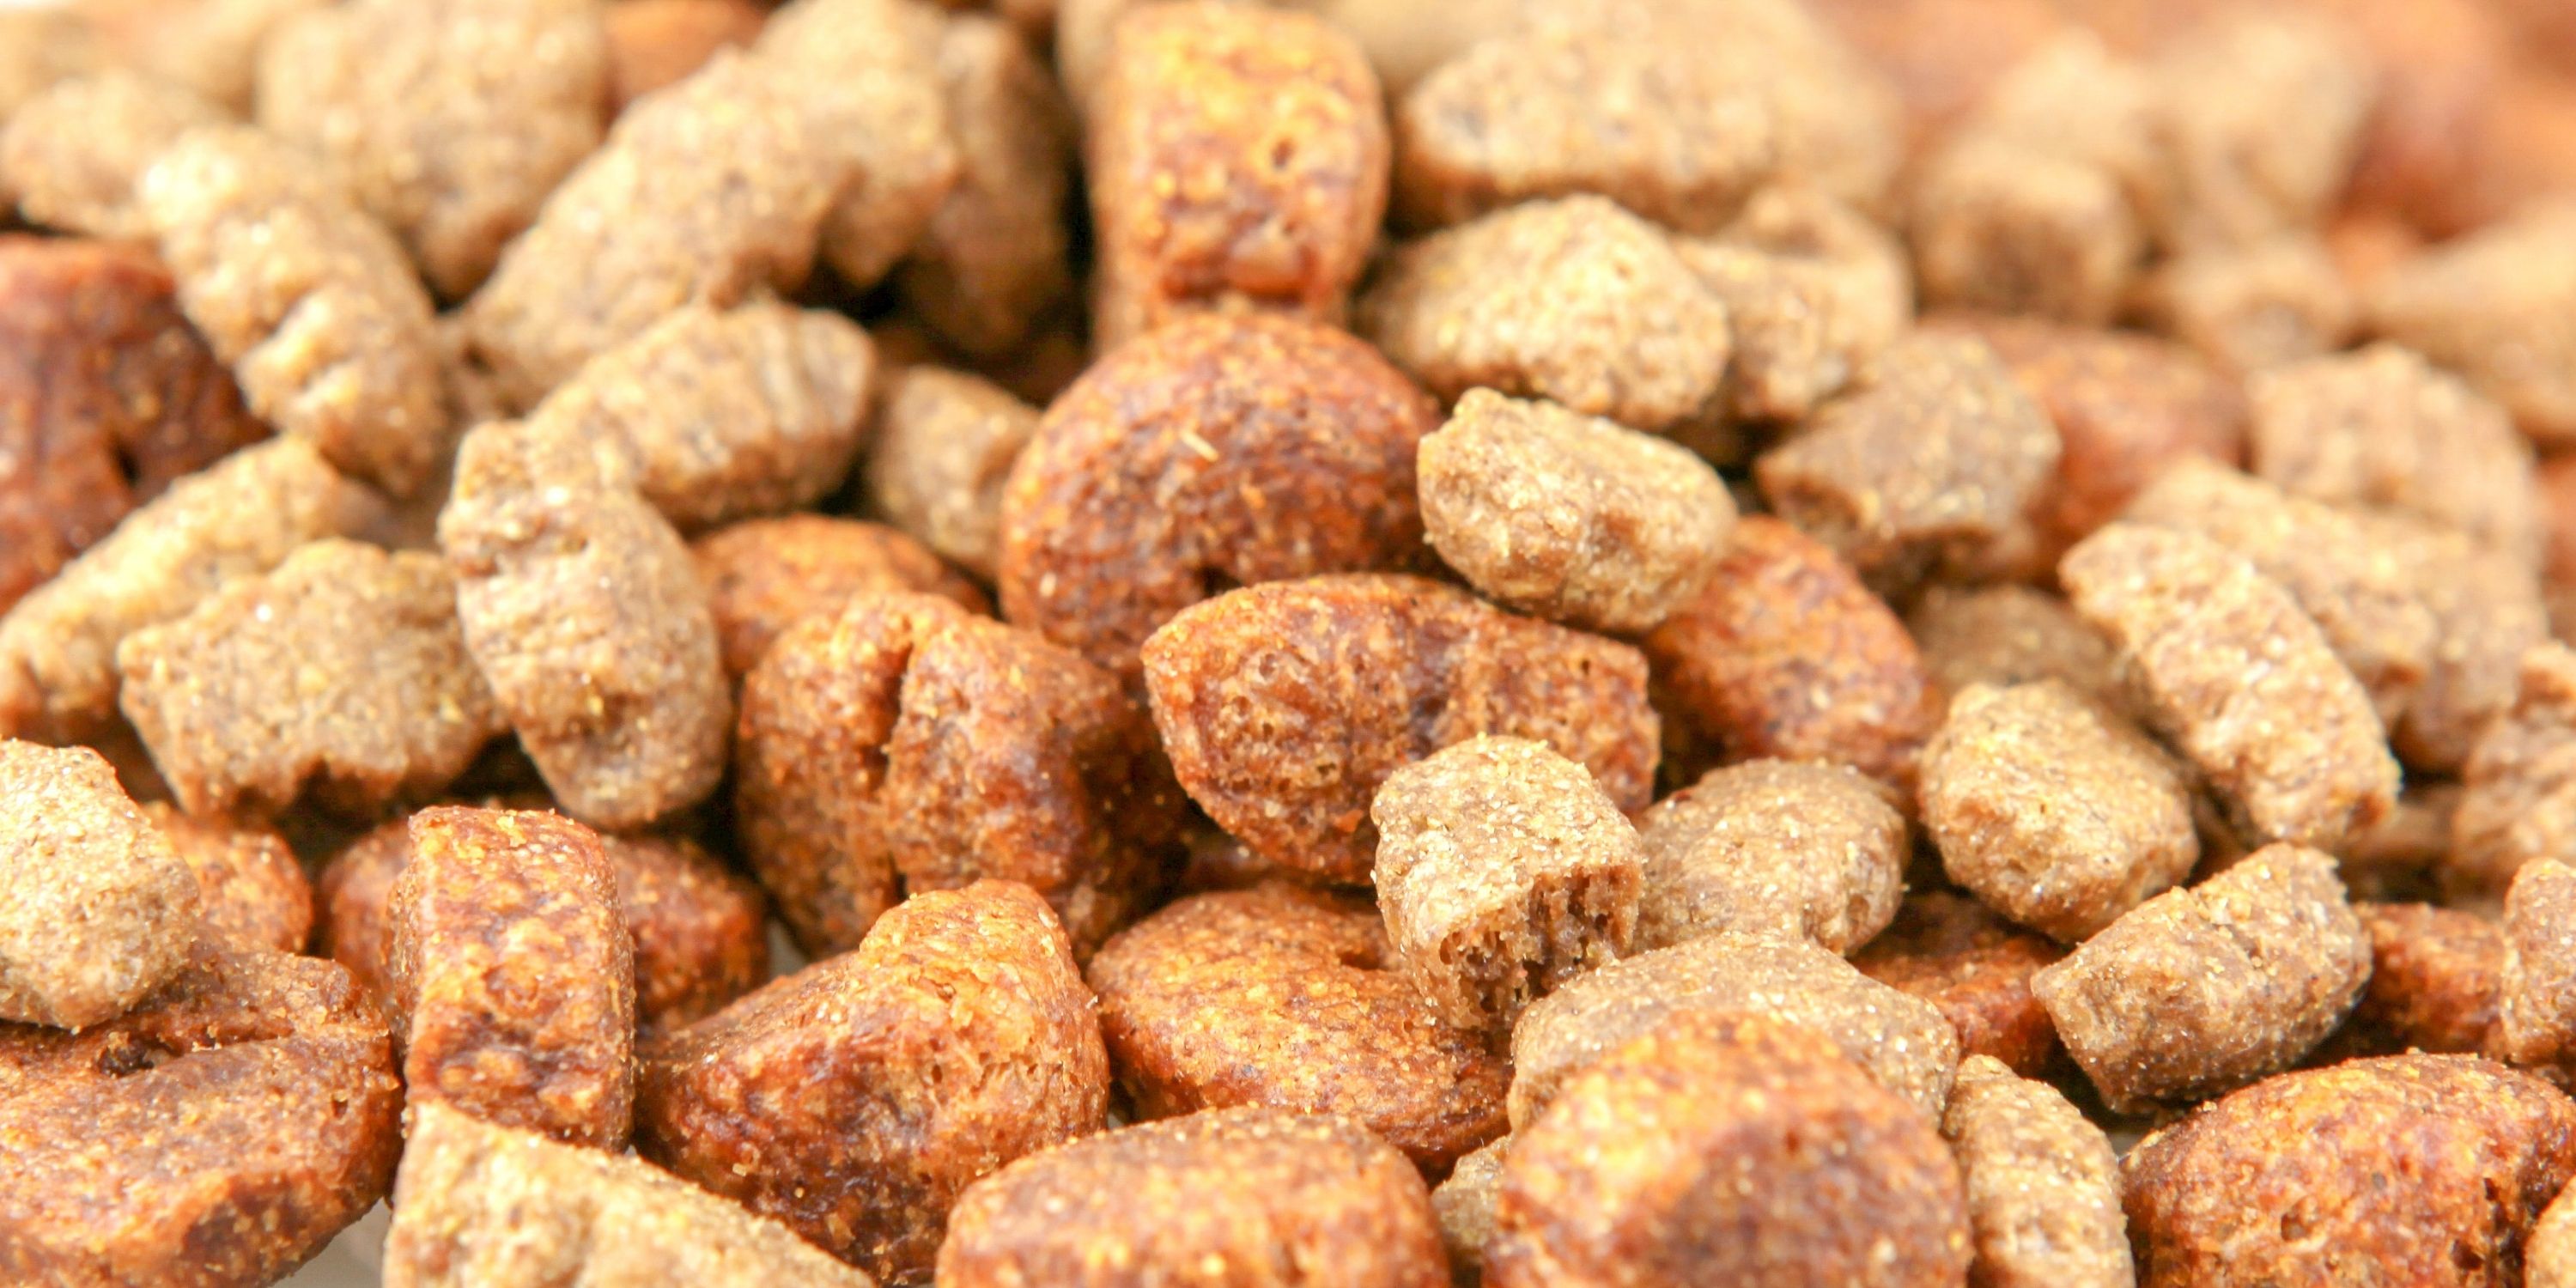 Best Grain-Free Dog Foods